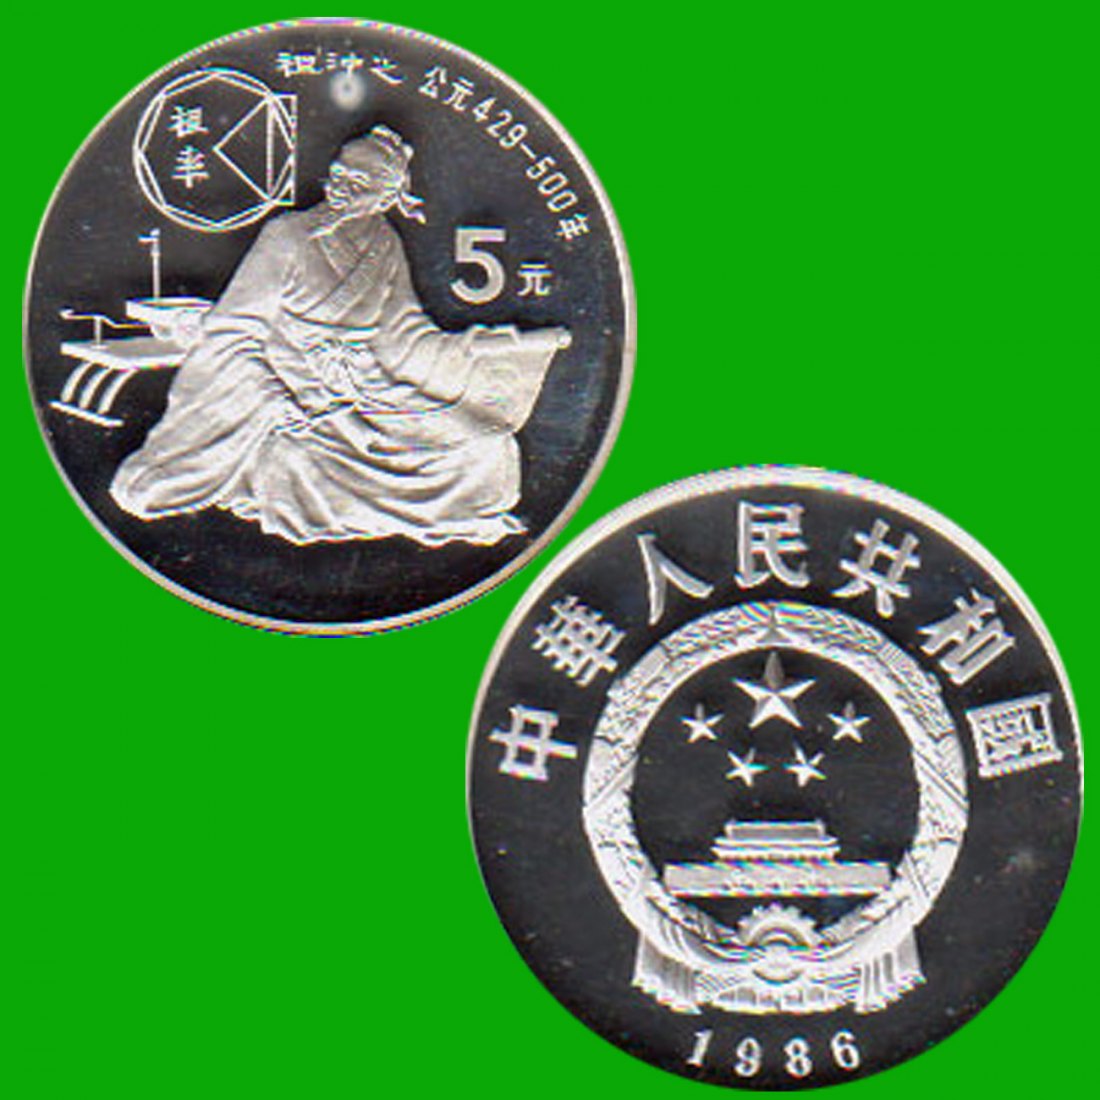  China 5 Yuan Silbermünze *Zu Chonzhi - Mathematiker u. Astronom* 1986 *PP* max 30.000St!   